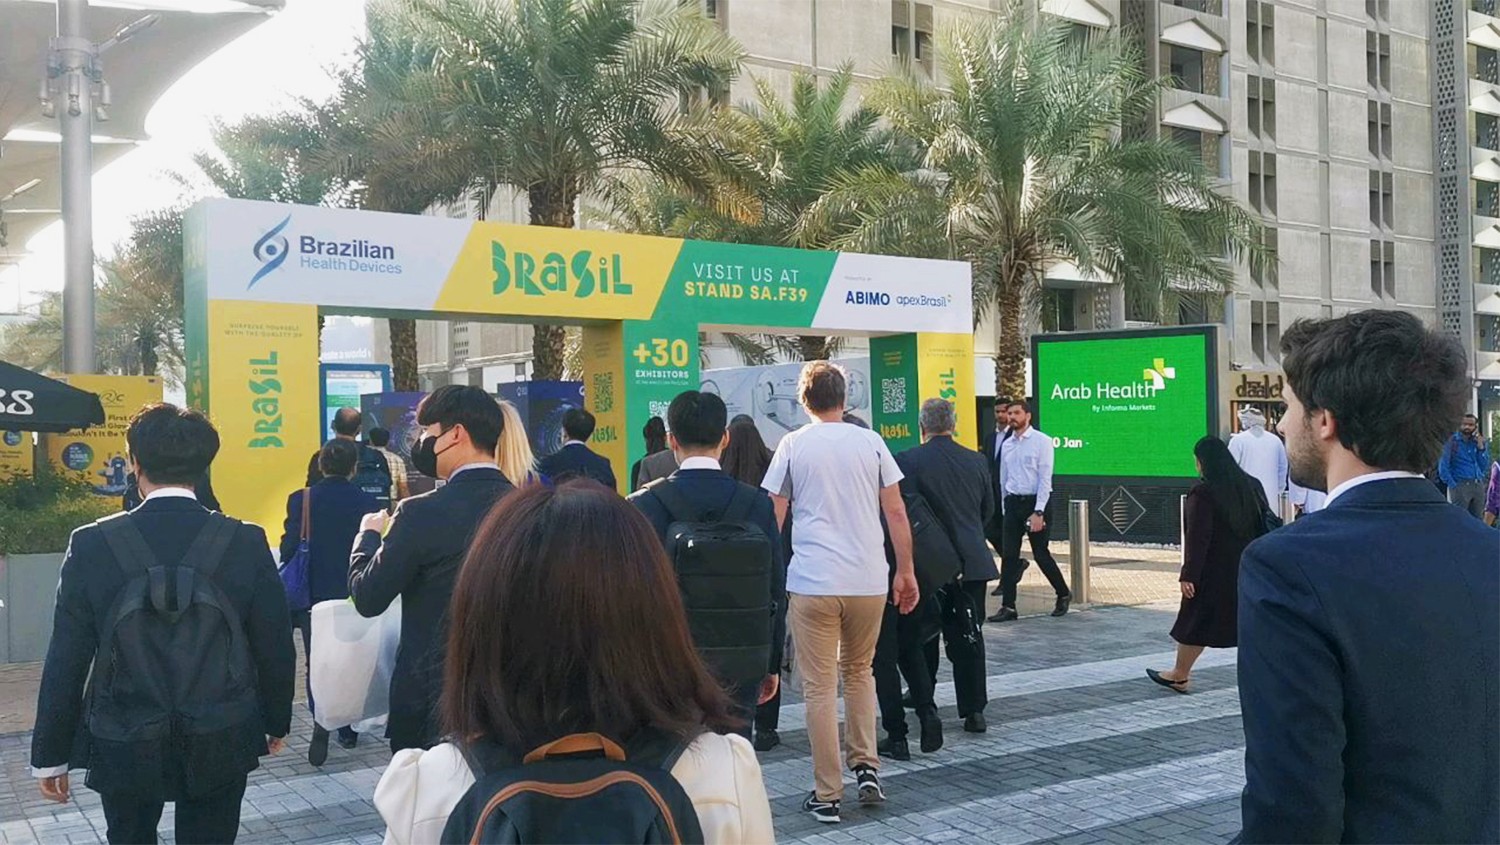 BIOBASE Appears at Arab Health Exhibition in Dubai